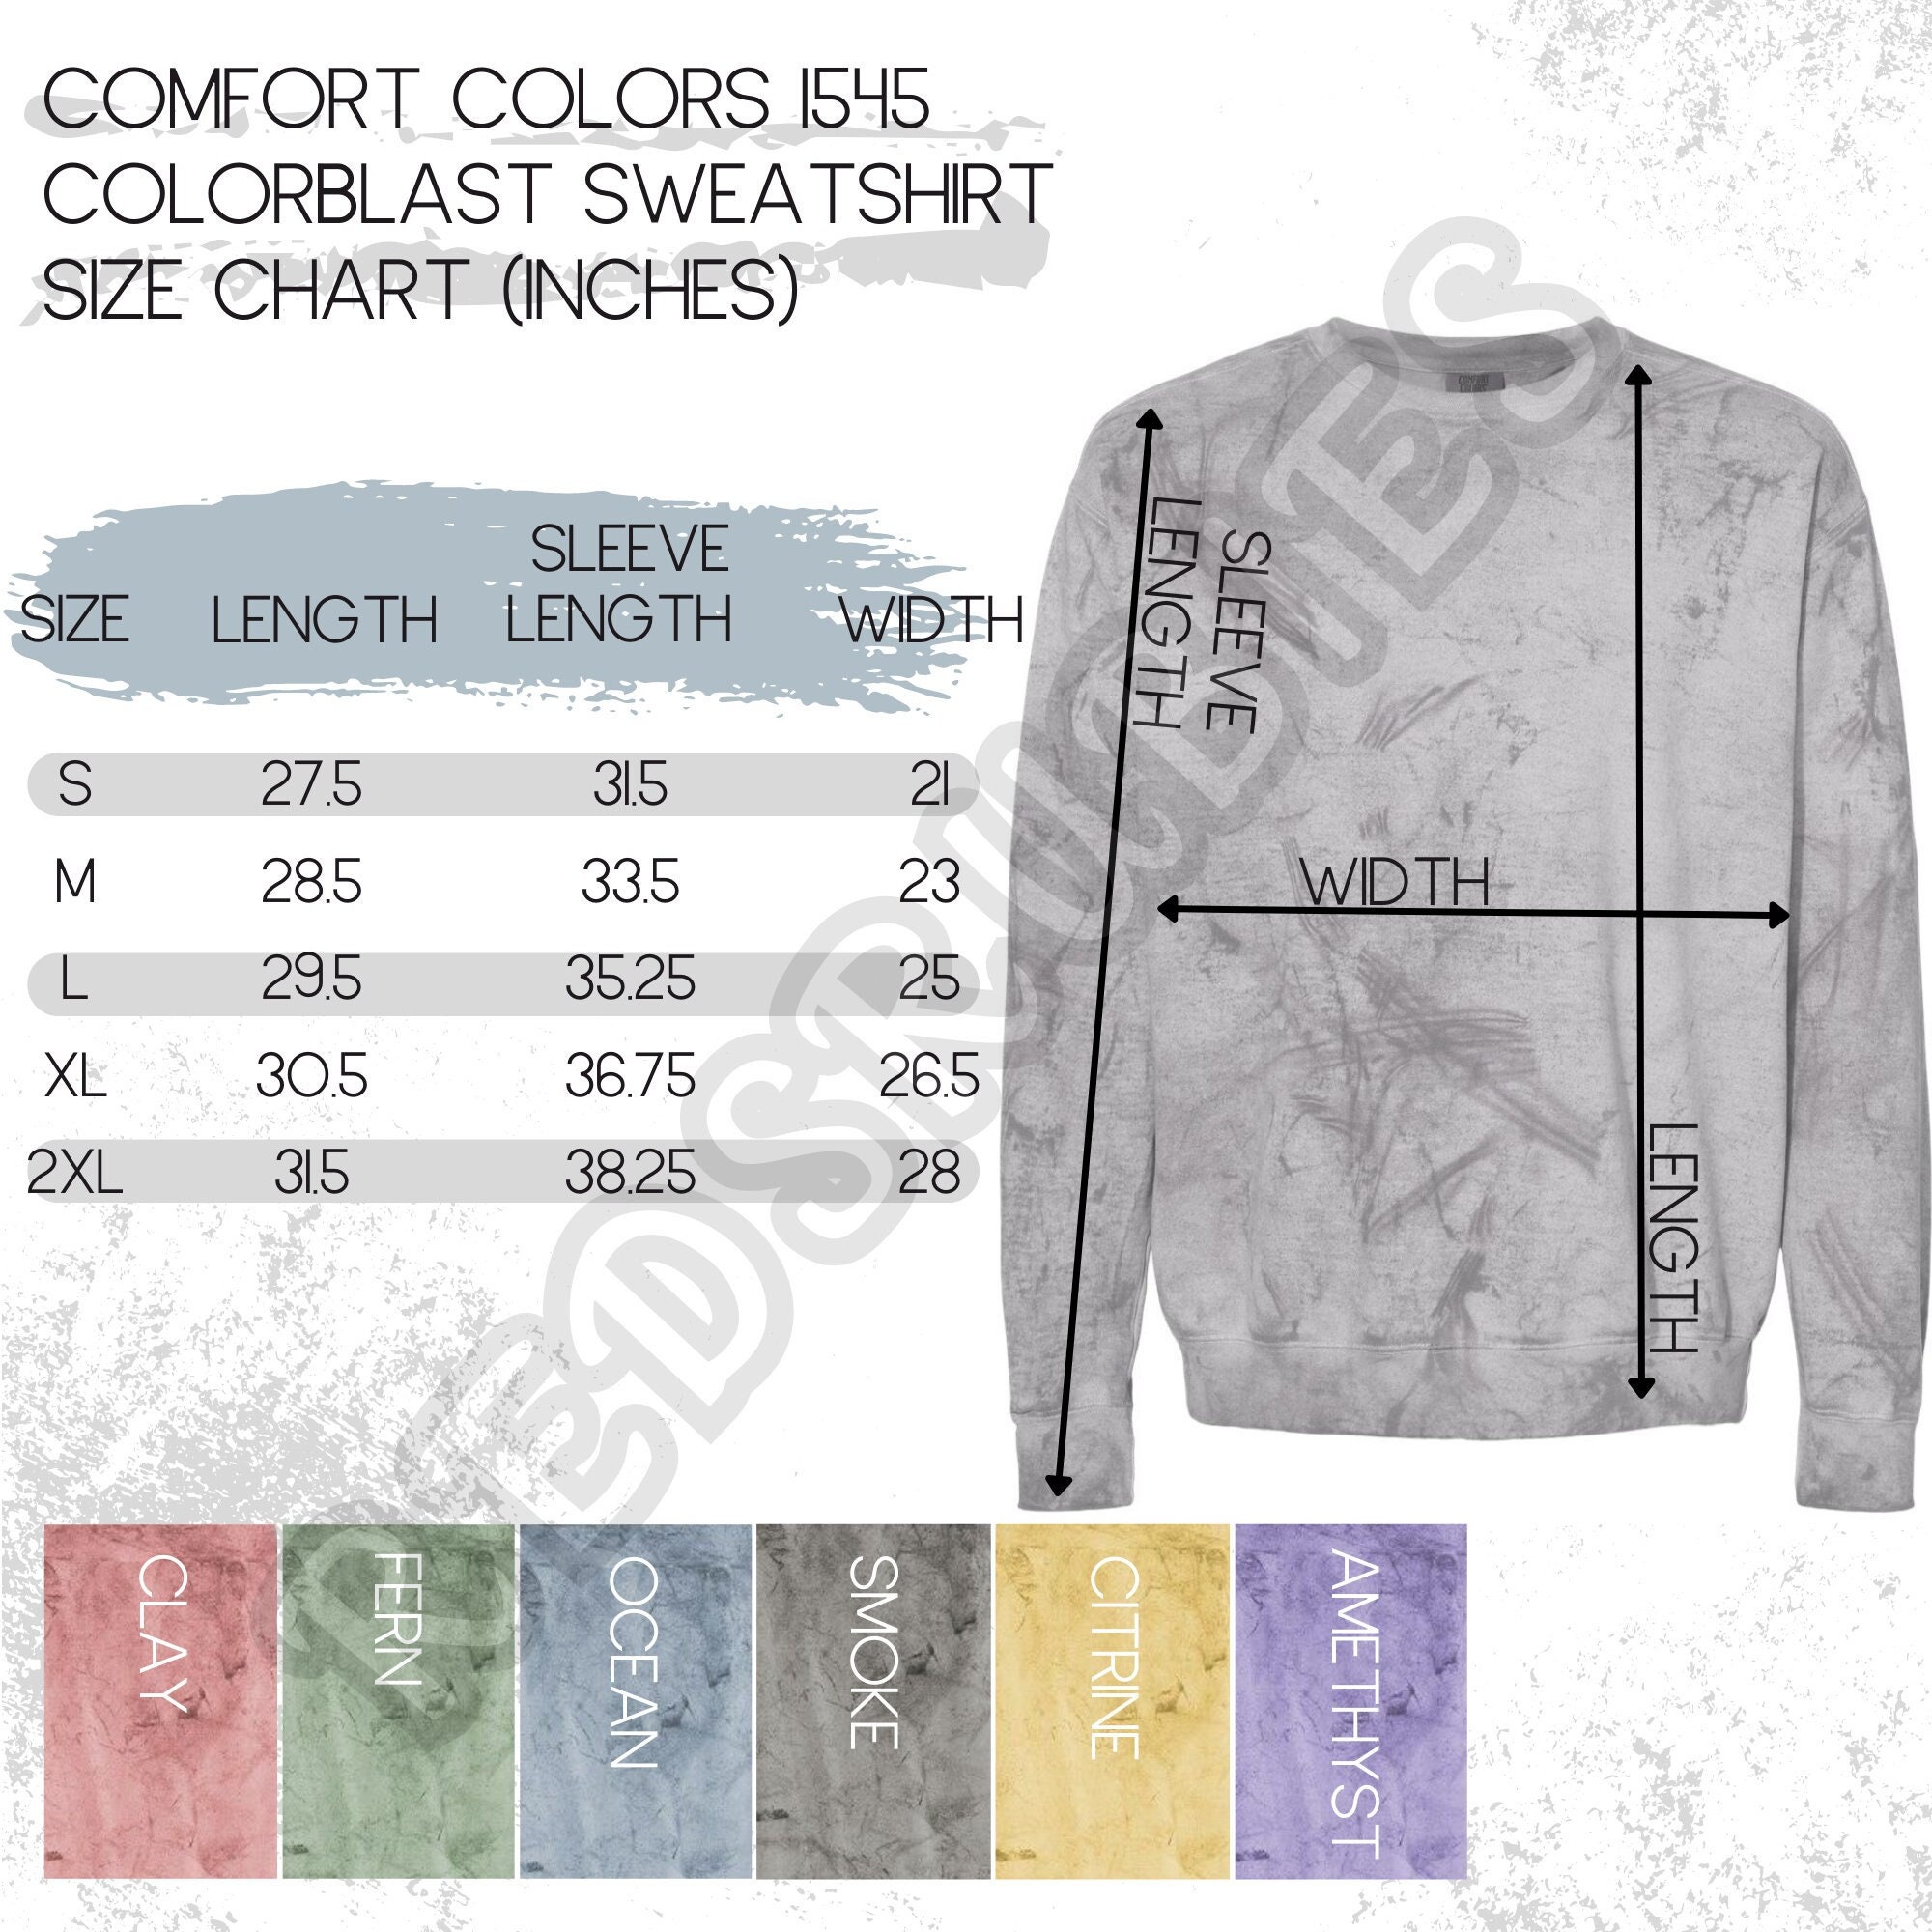 Comfort Colors 1566 Color Chartall Colors Color Chart for Comfort Colors  1566comfort Colors Crewneck Sweatshirt Color Chartcc1566 